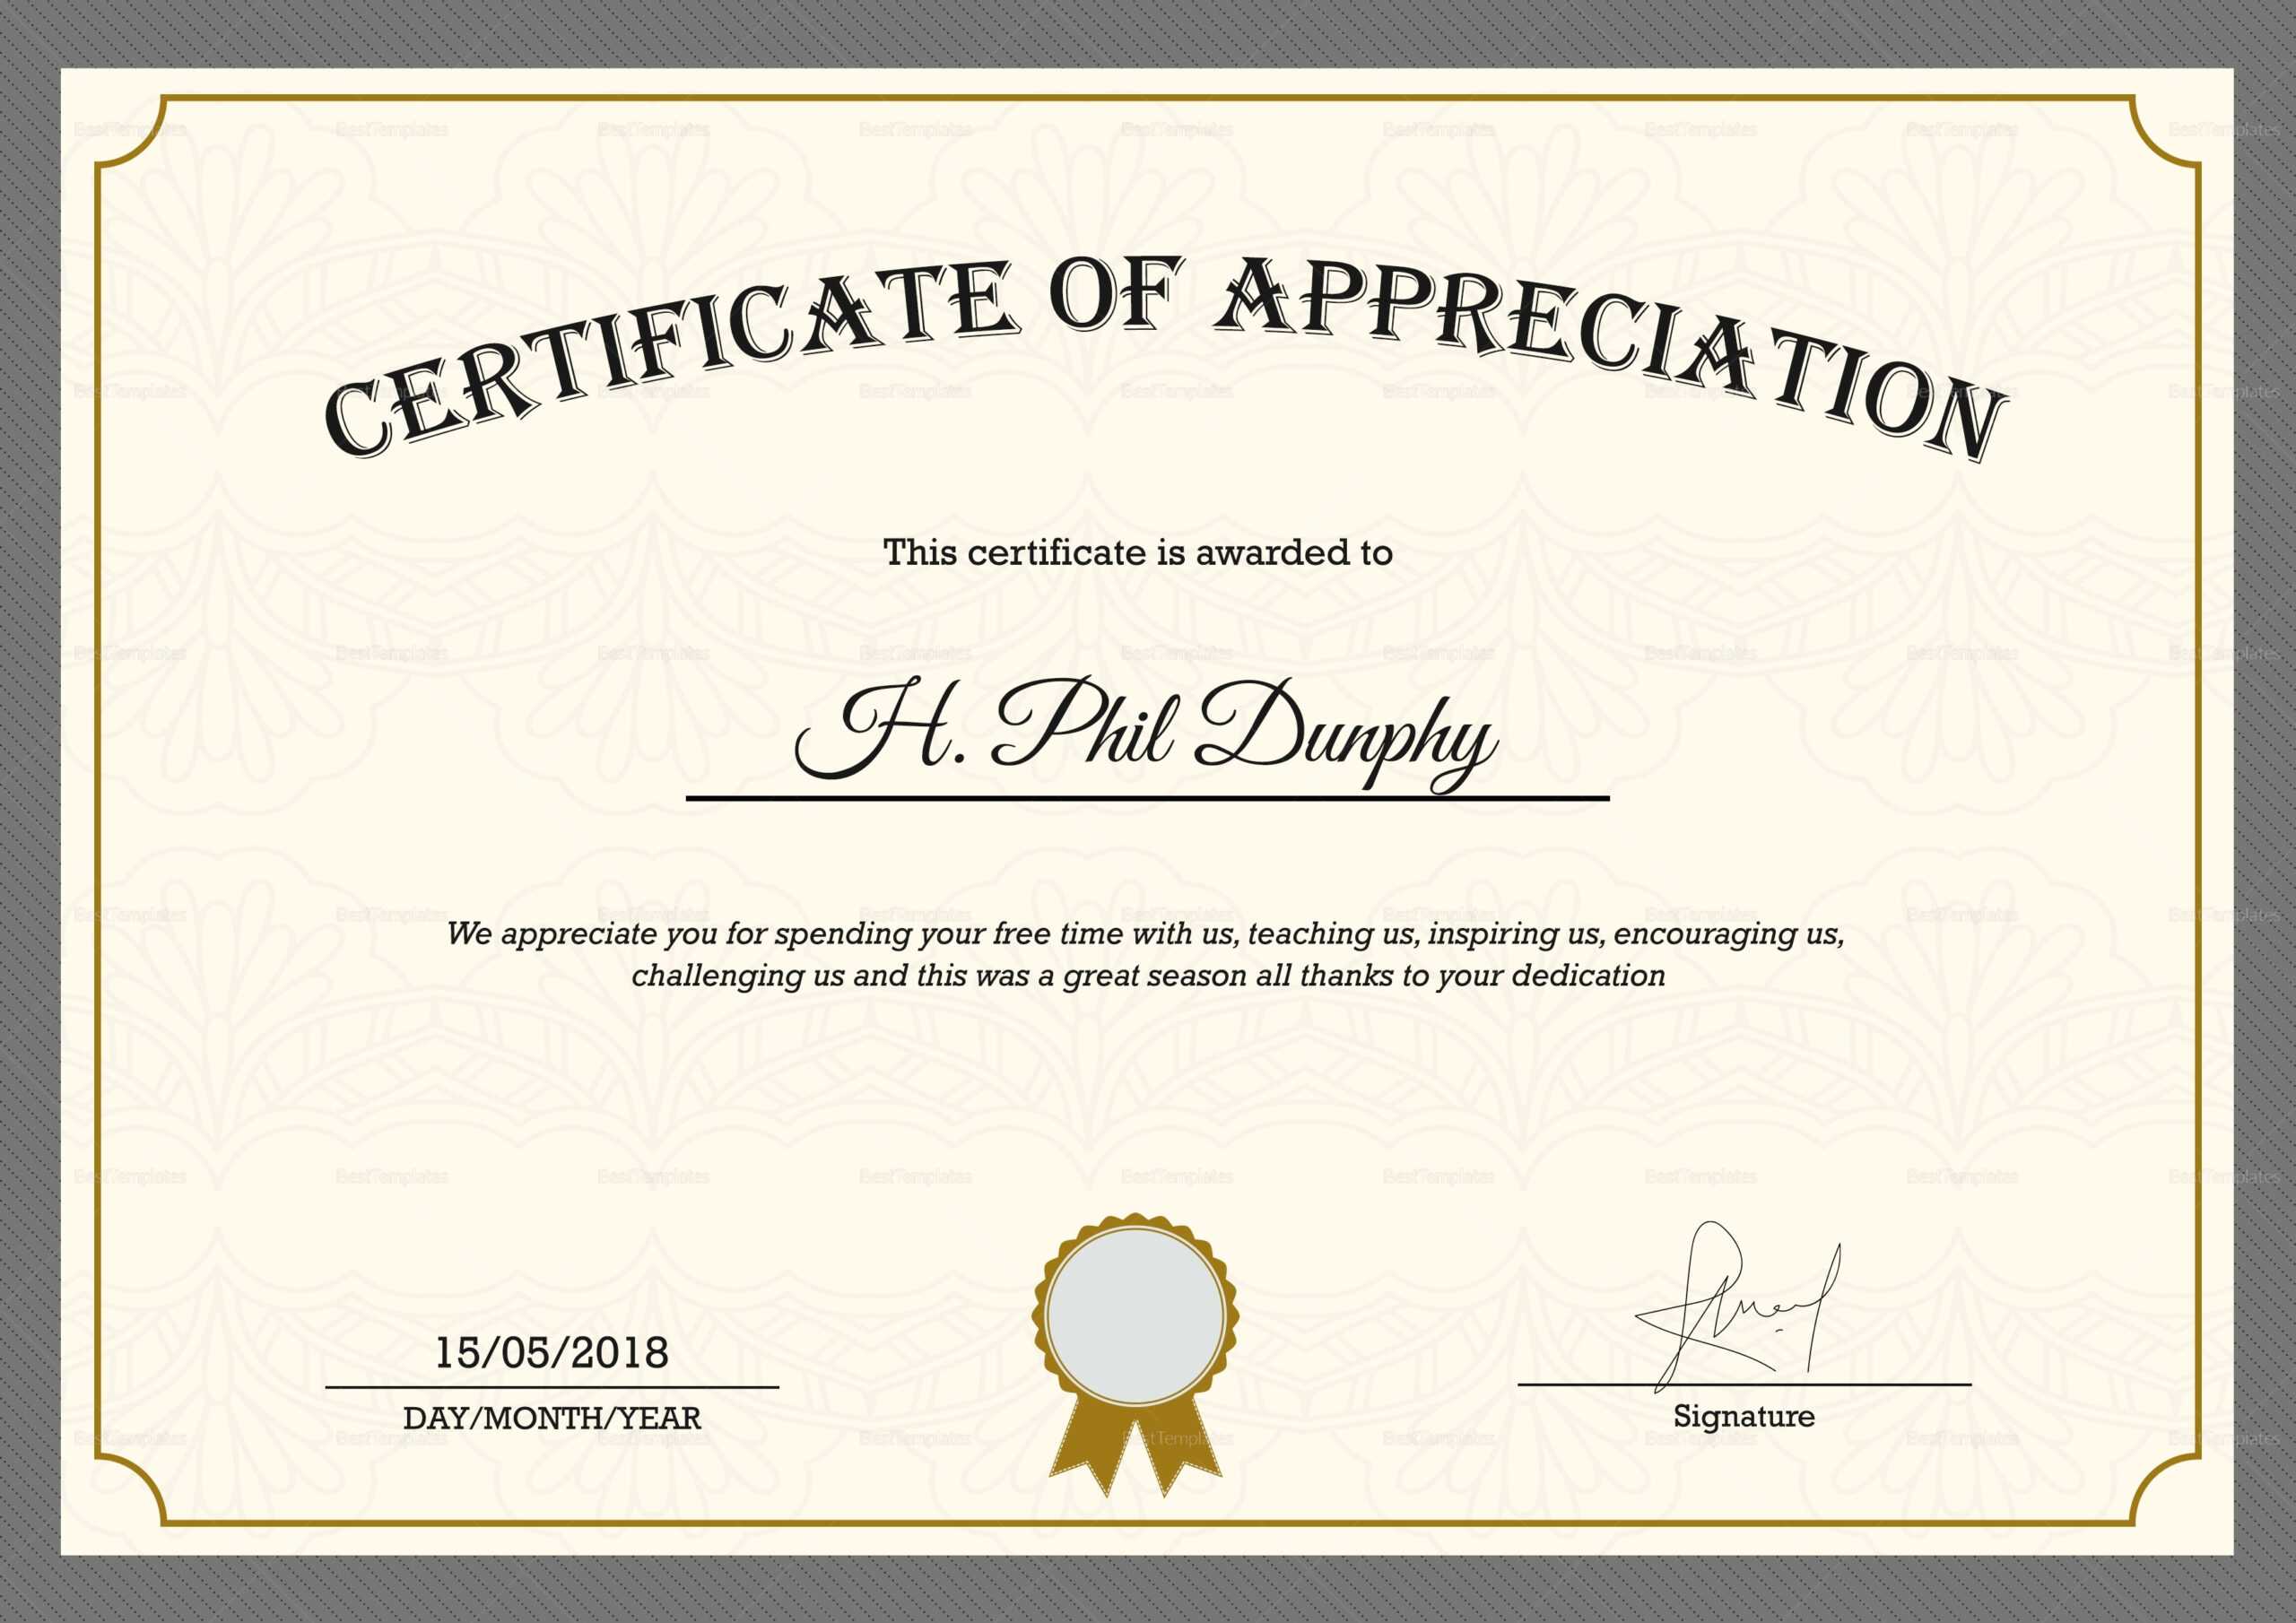 Sample Company Appreciation Certificate Template Within Inside In Appreciation Certificate Templates